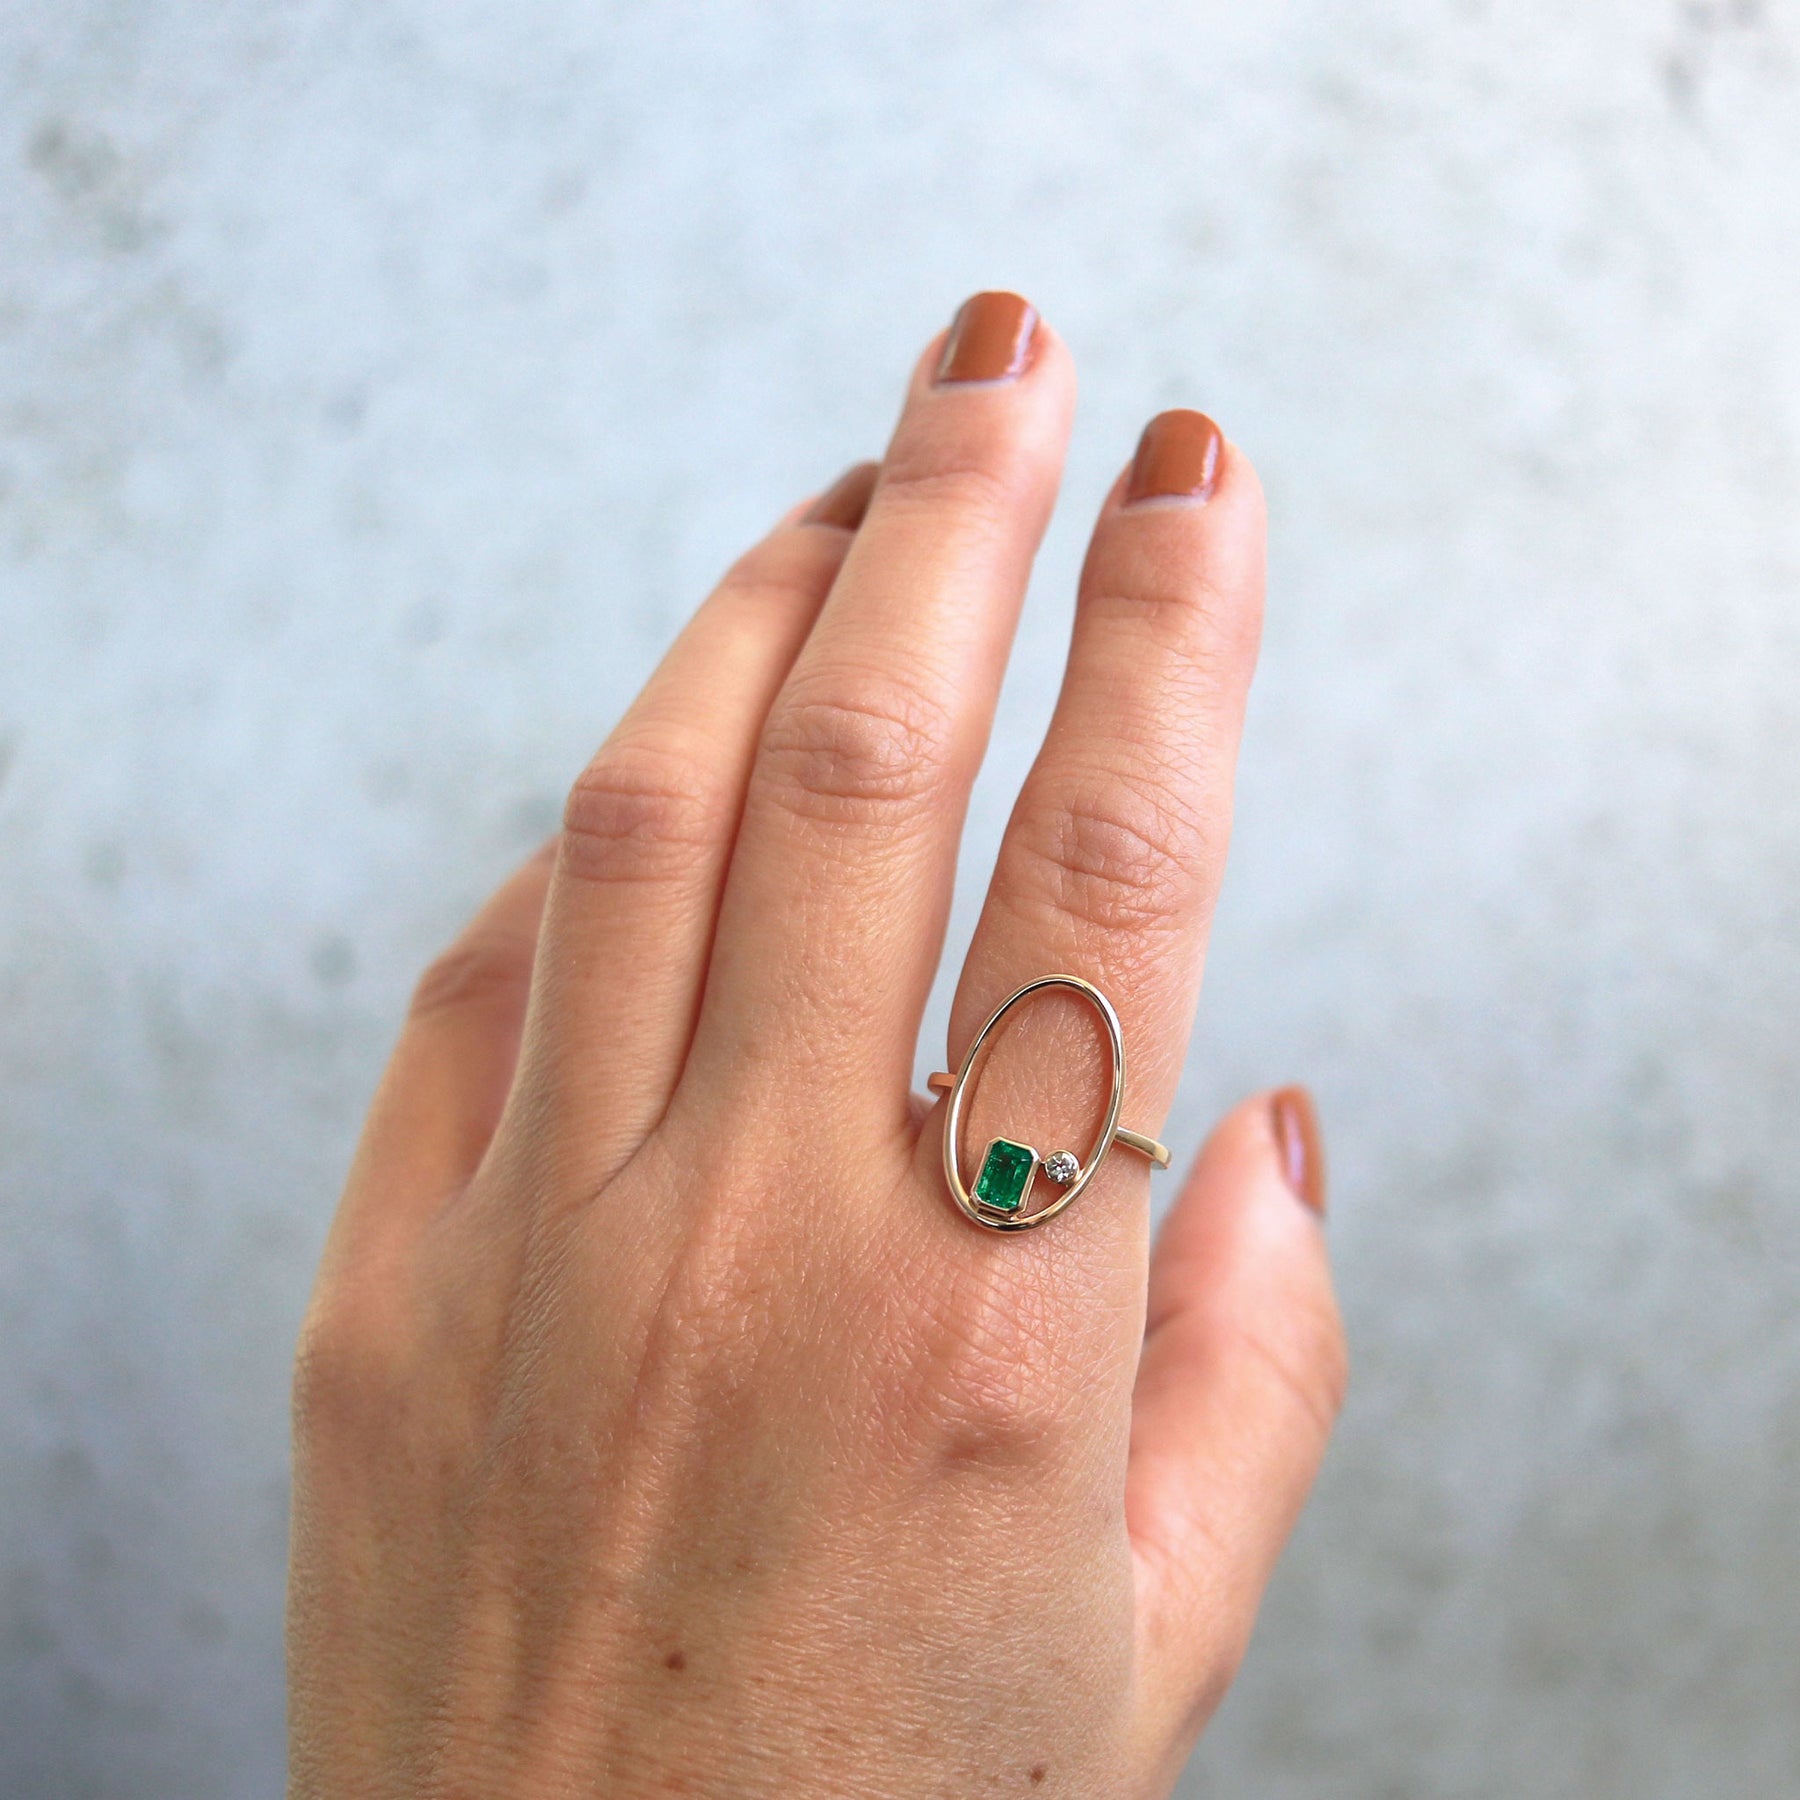 The Safiya Ring with Emerald and Aquamarine